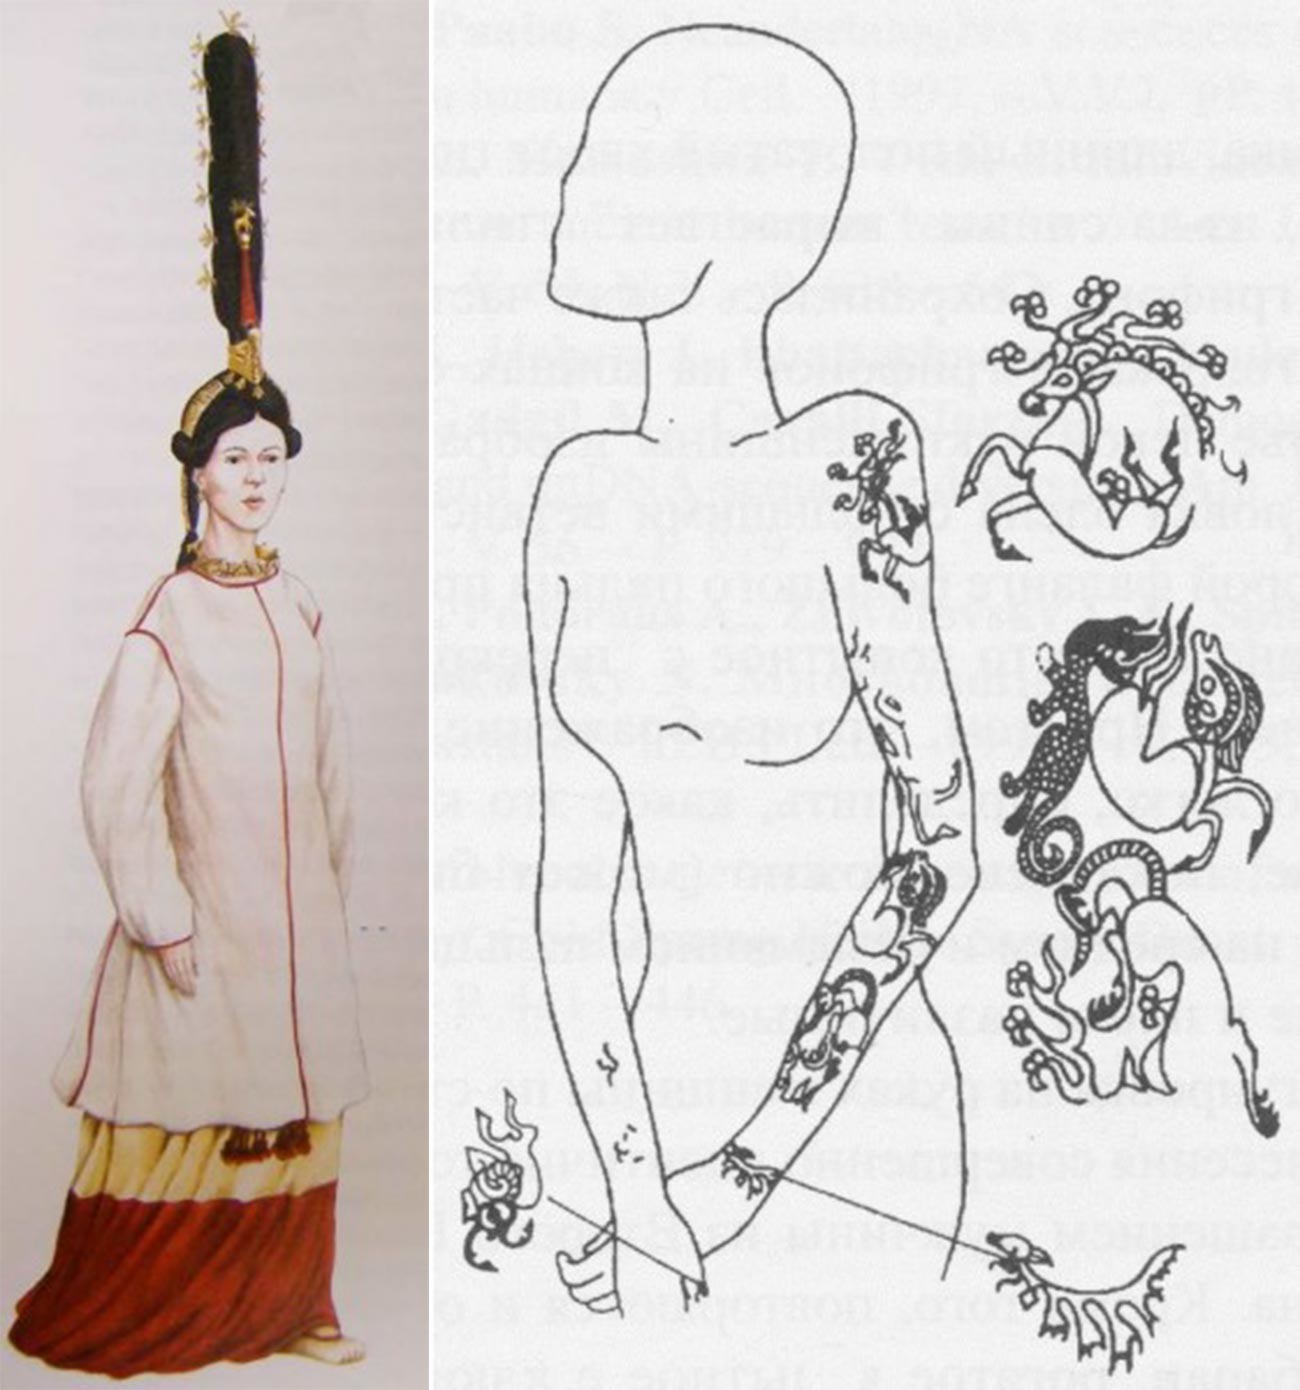 The 'Maiden's' tattoos.